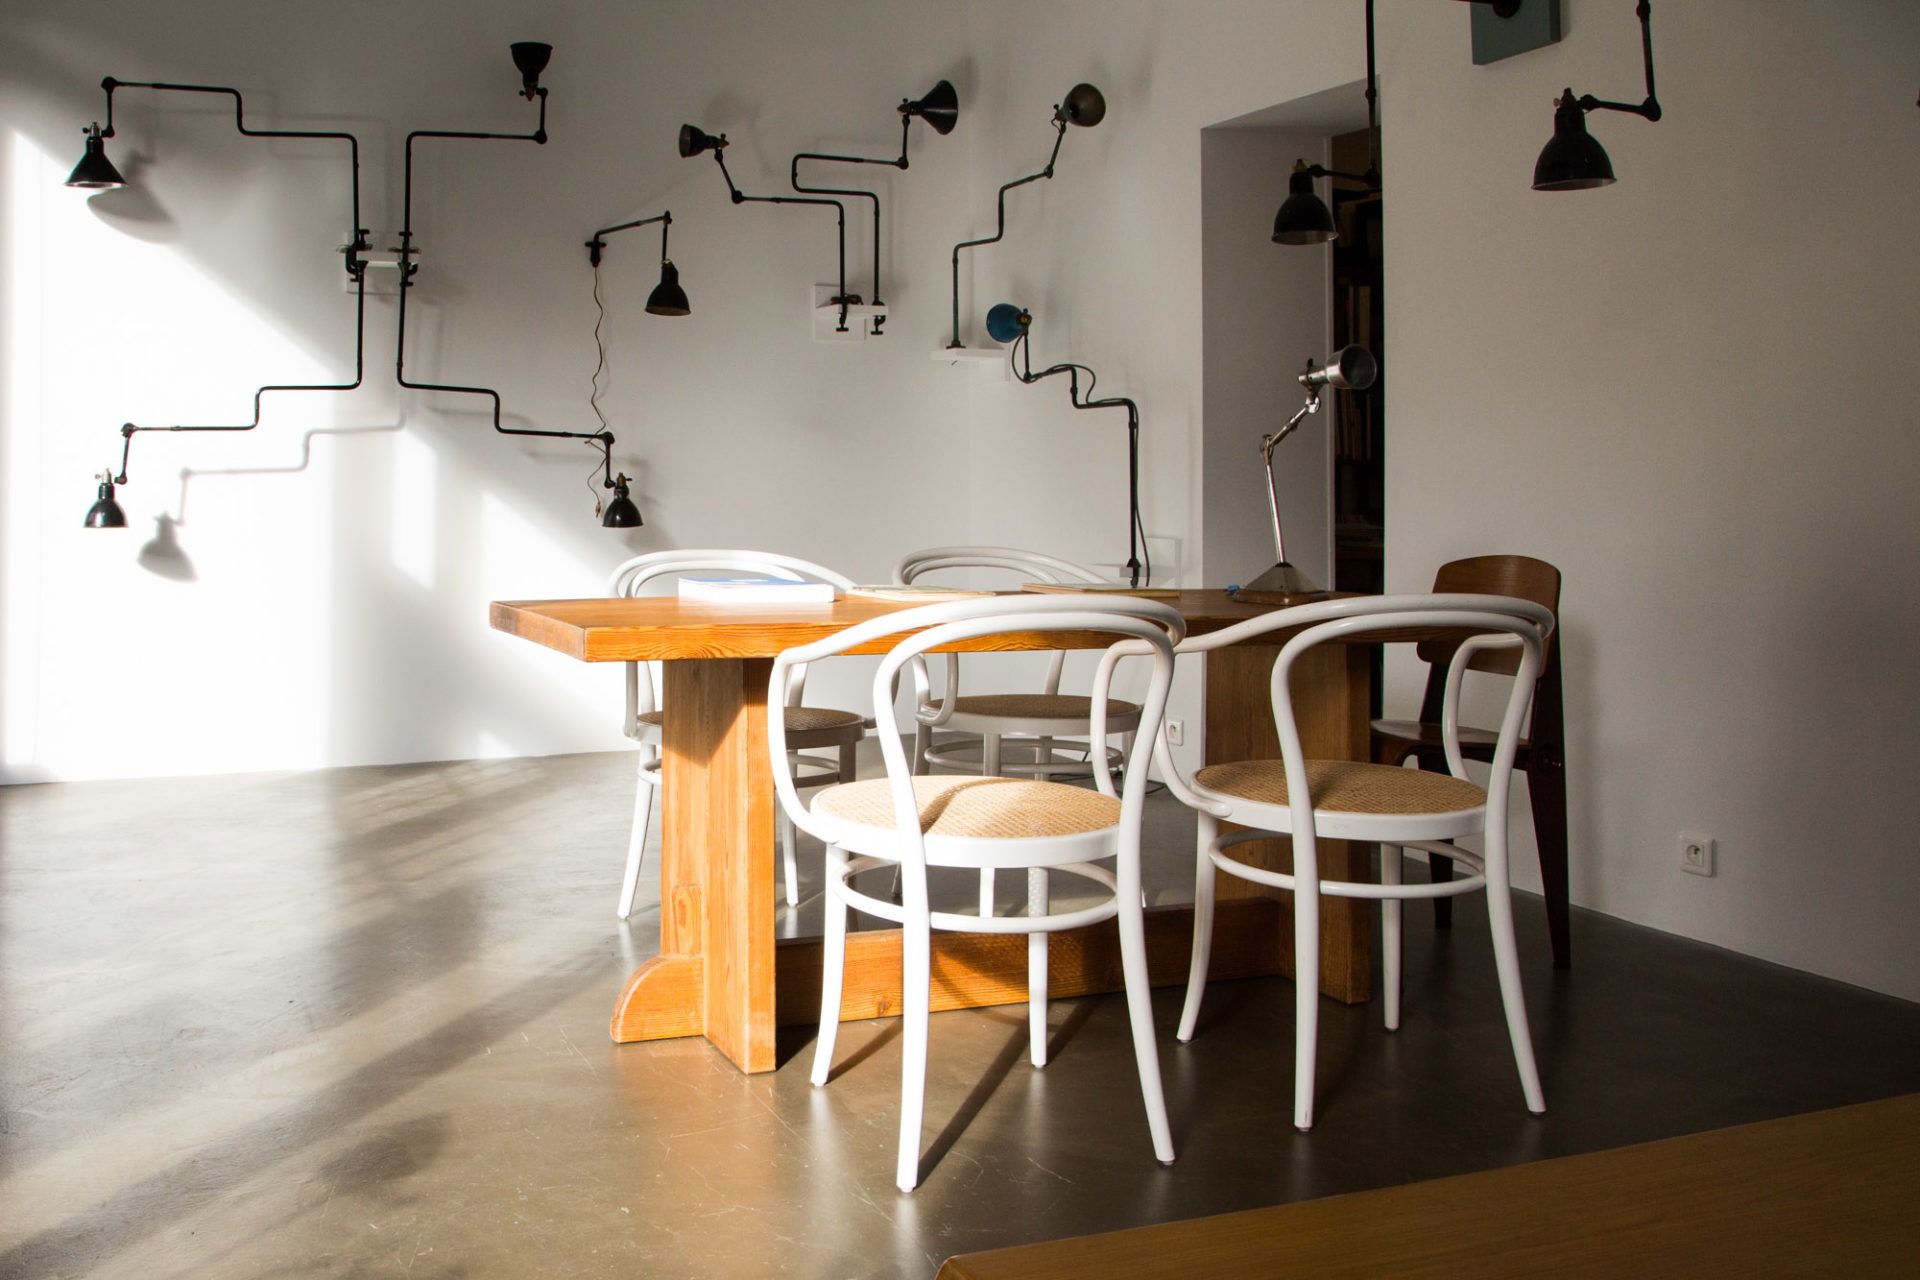 Lampe Gras - Design industriel - Galerie Teisso